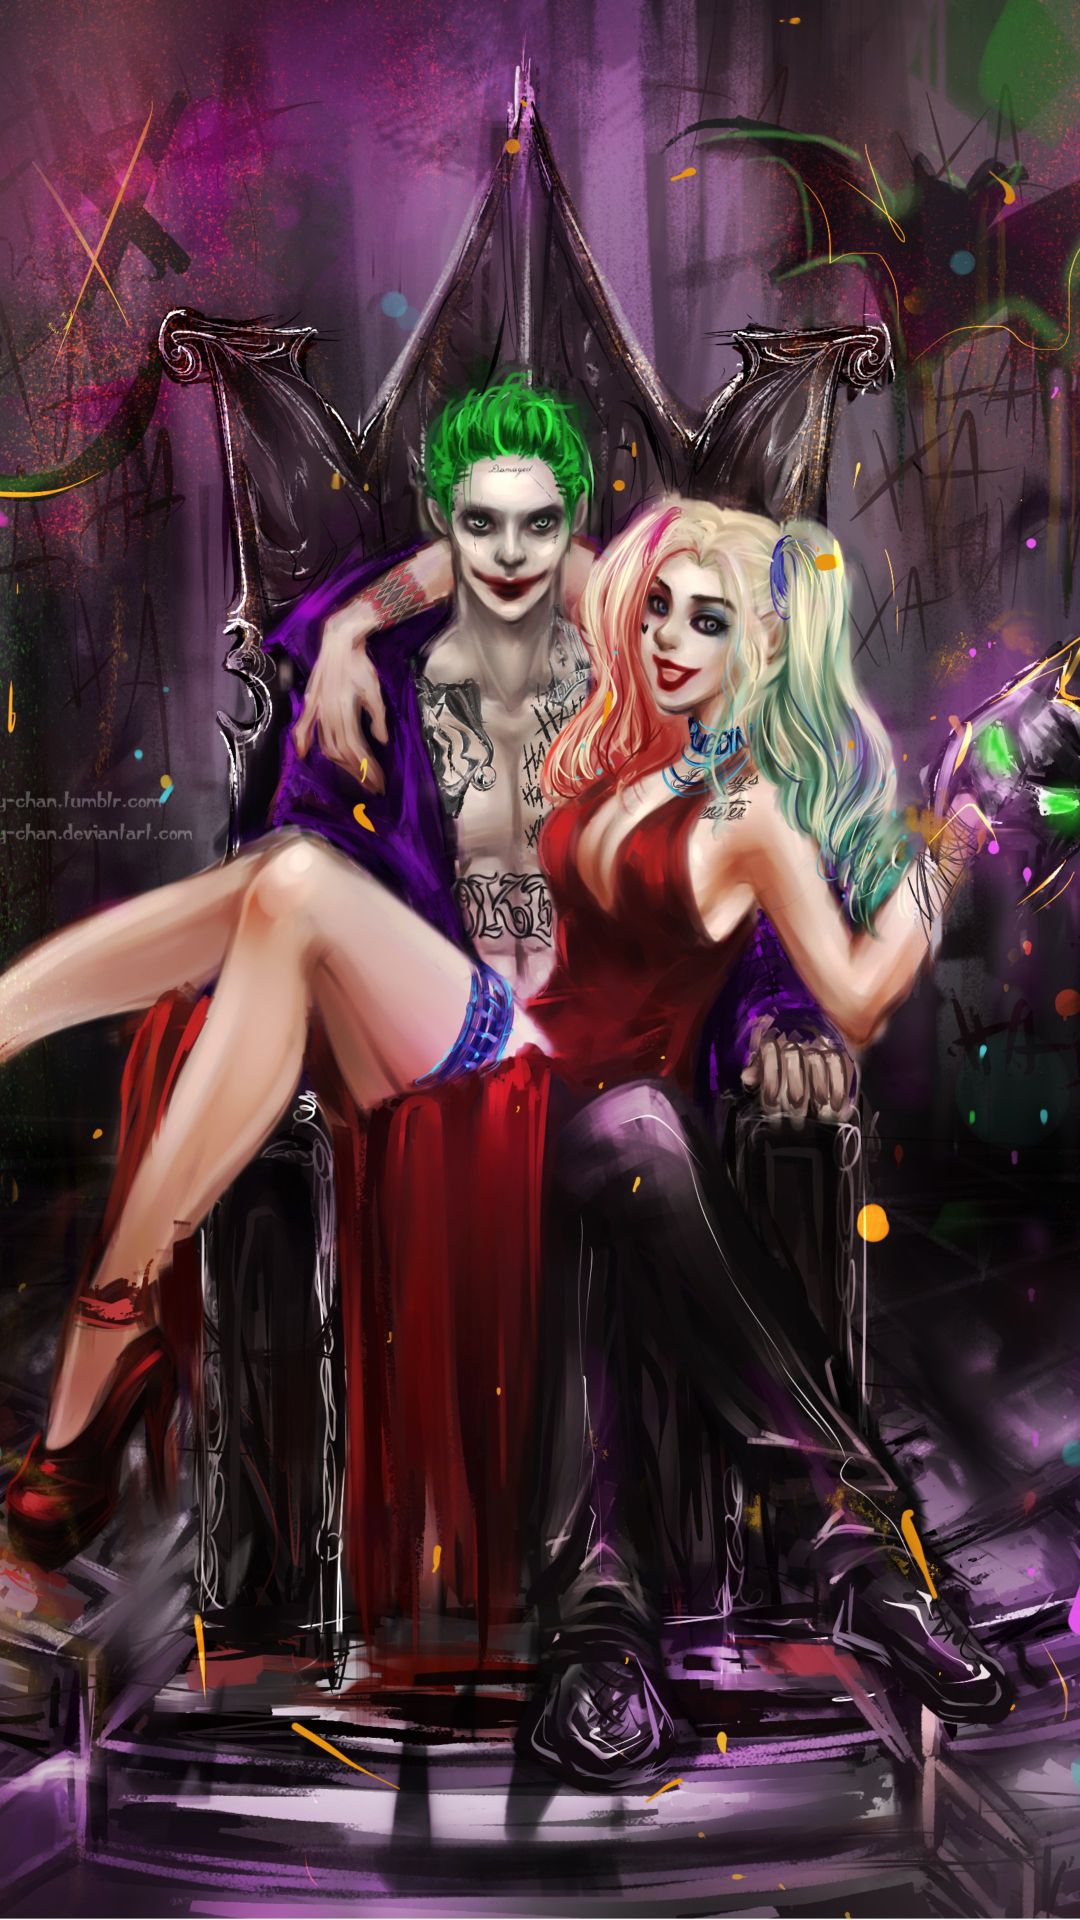 Joker and Harley Quinn iPhone Wallpapers -Top 25 Best Joker and Harley Quinn  iPhone Wallpapers - Getty Wallpapers